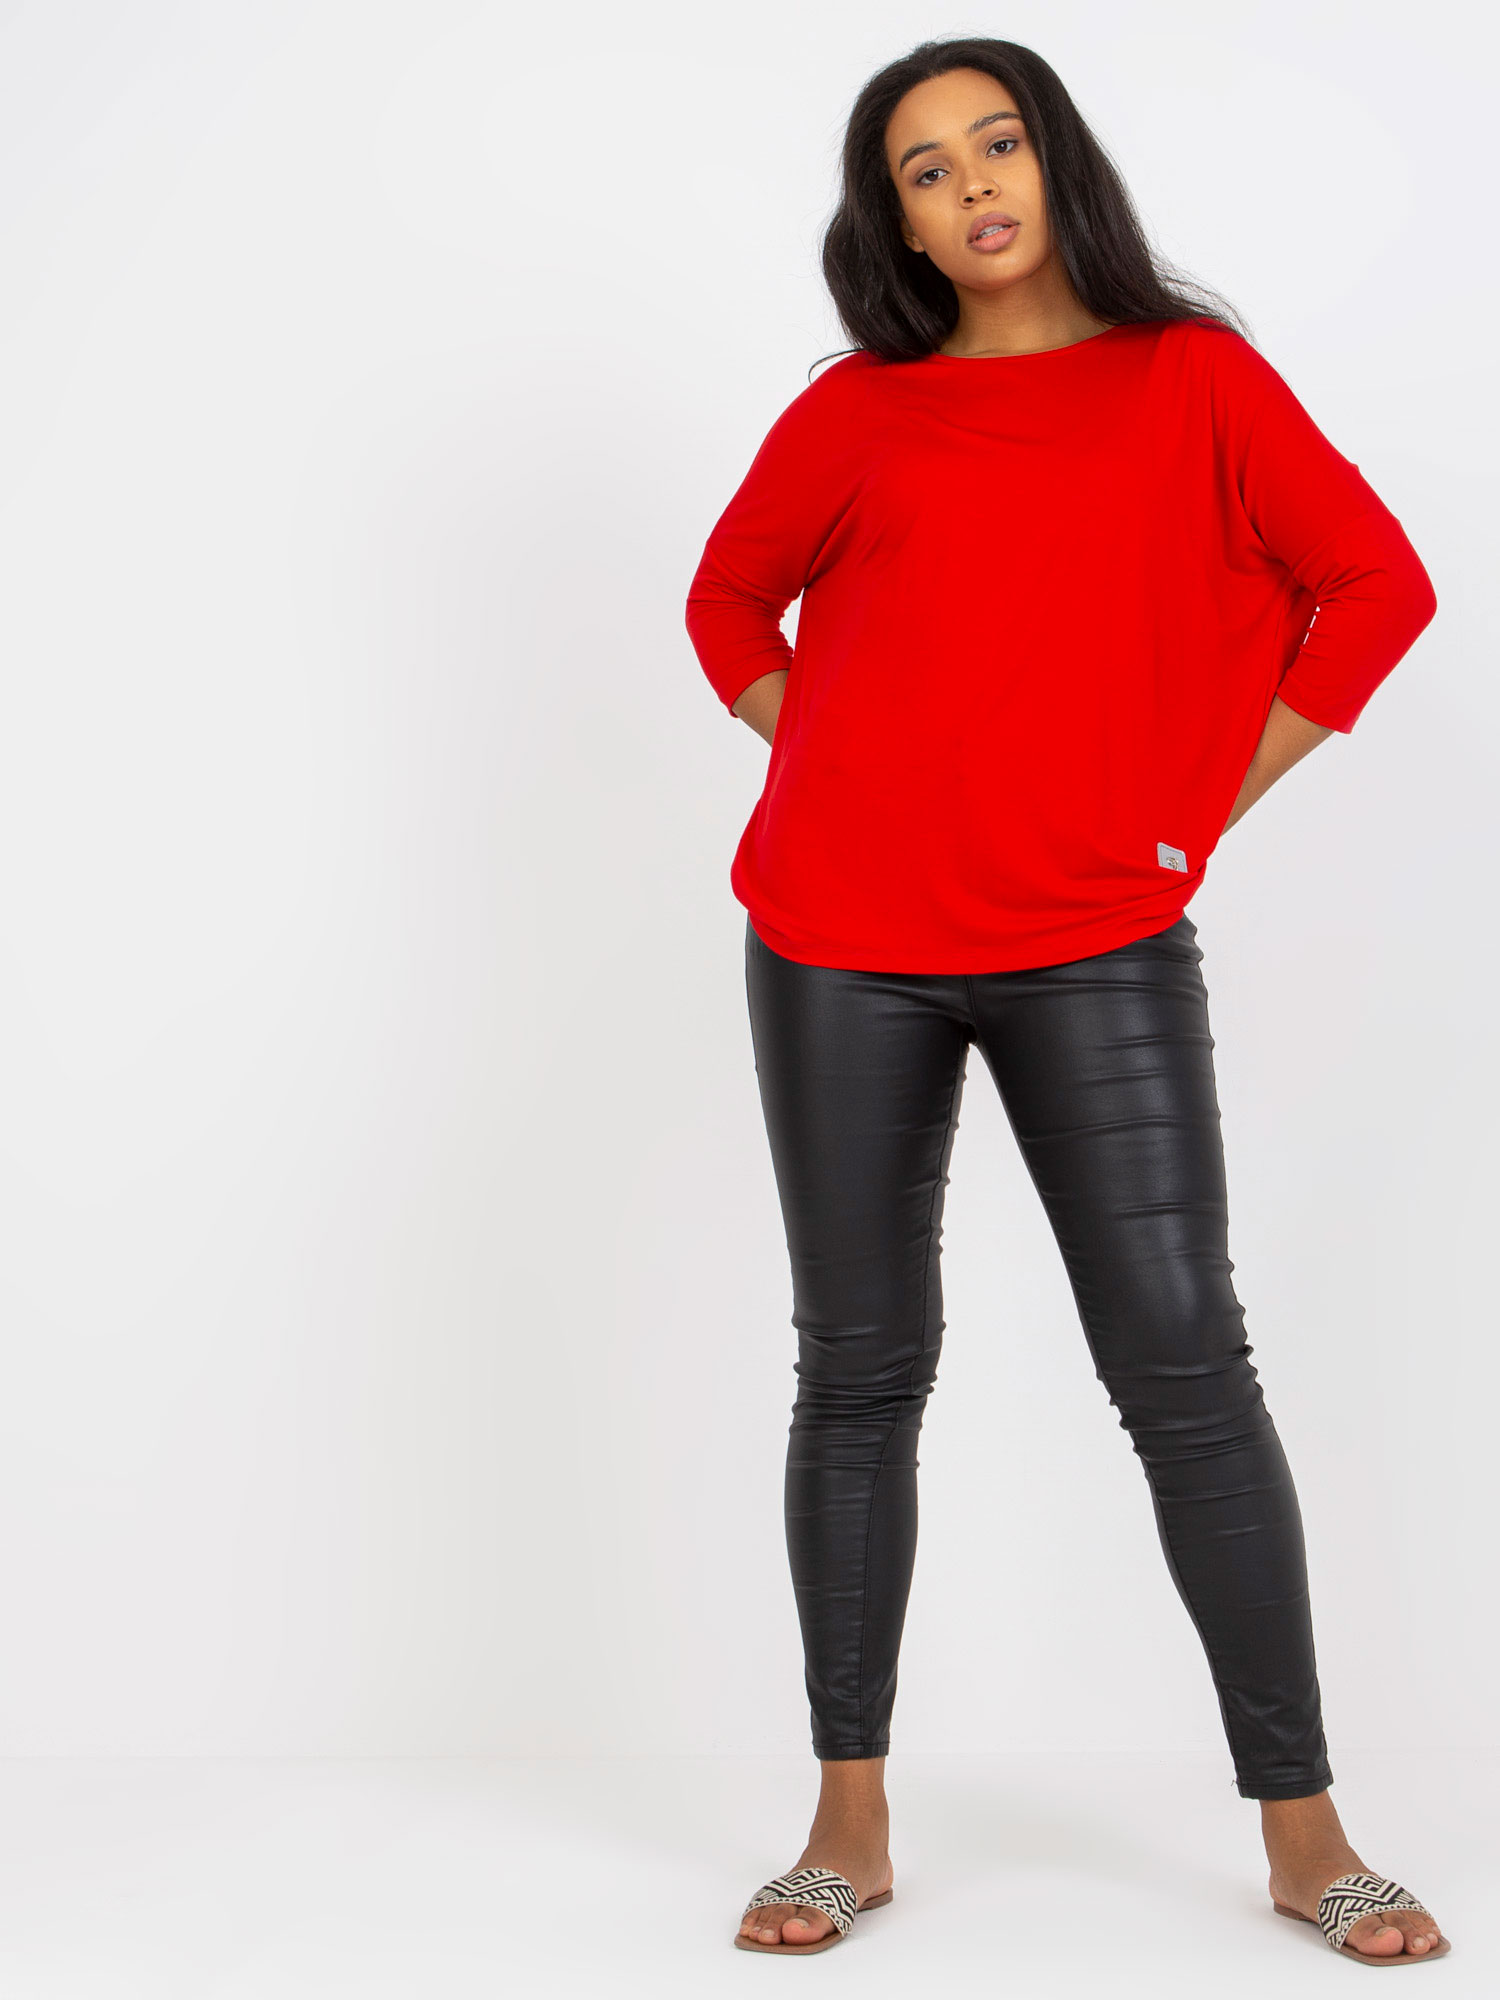 Plain red cotton blouse of larger size